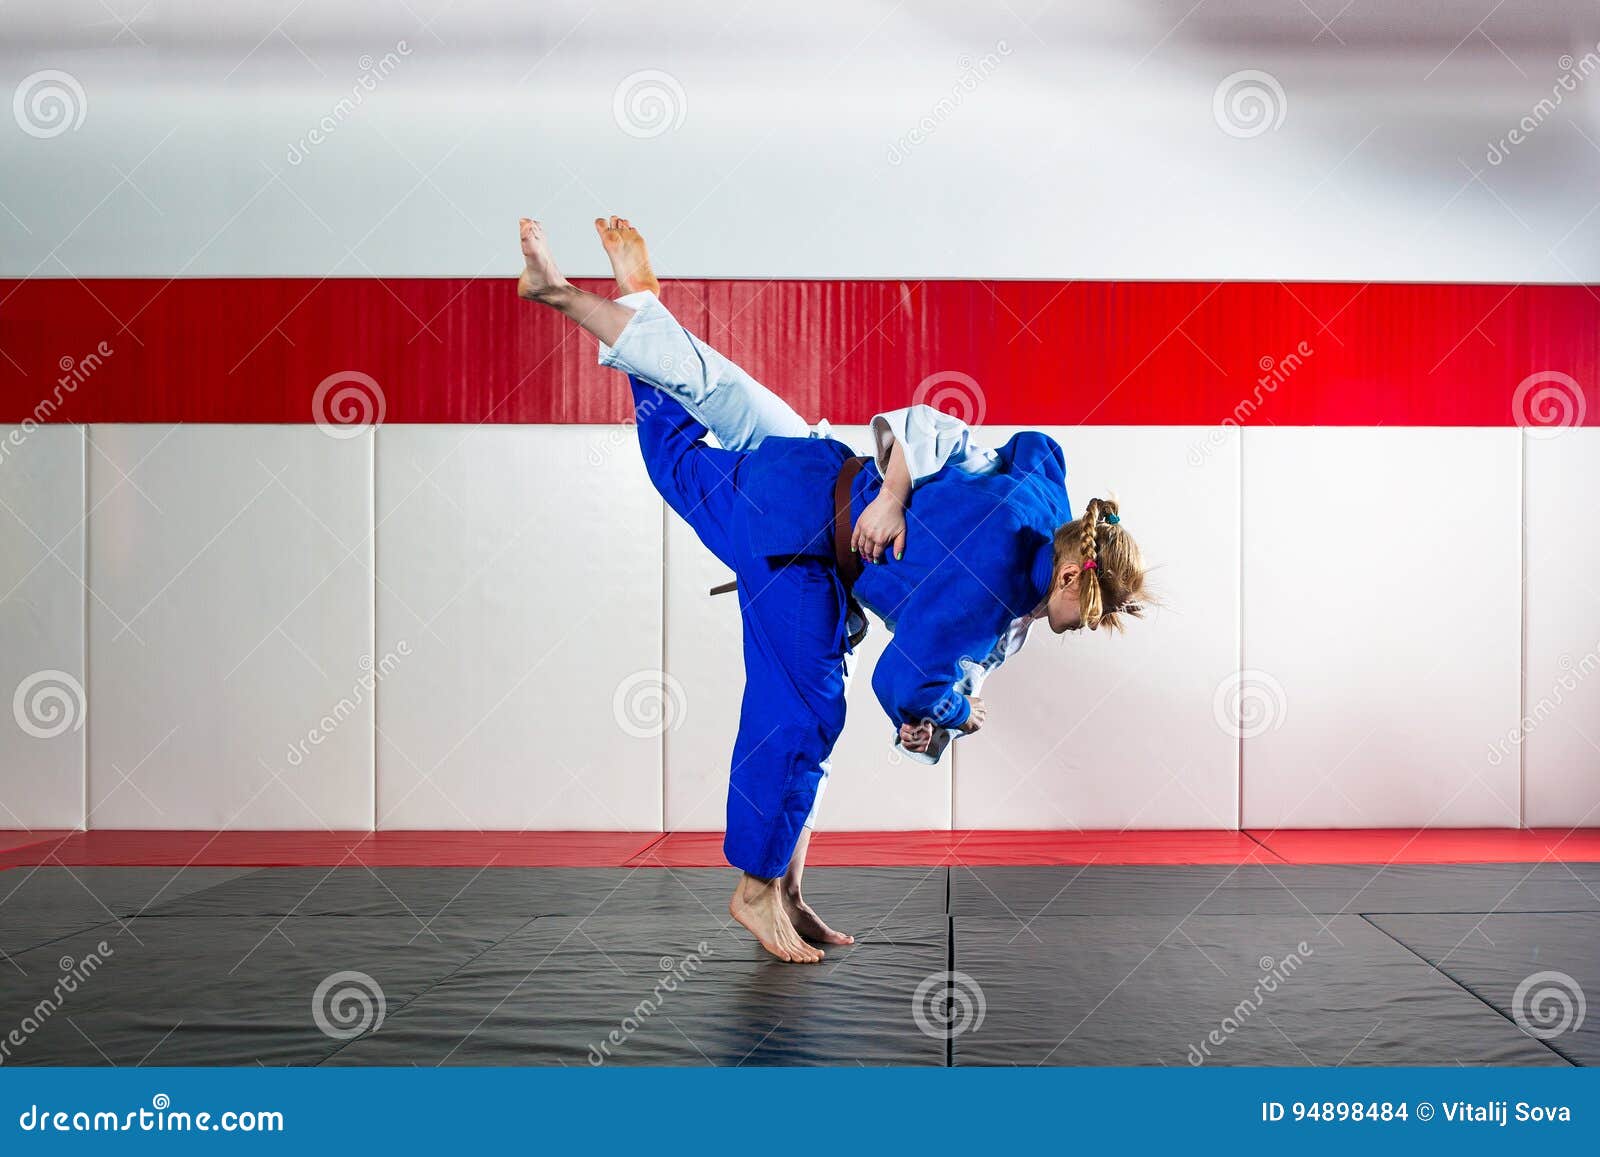 judo on tatami